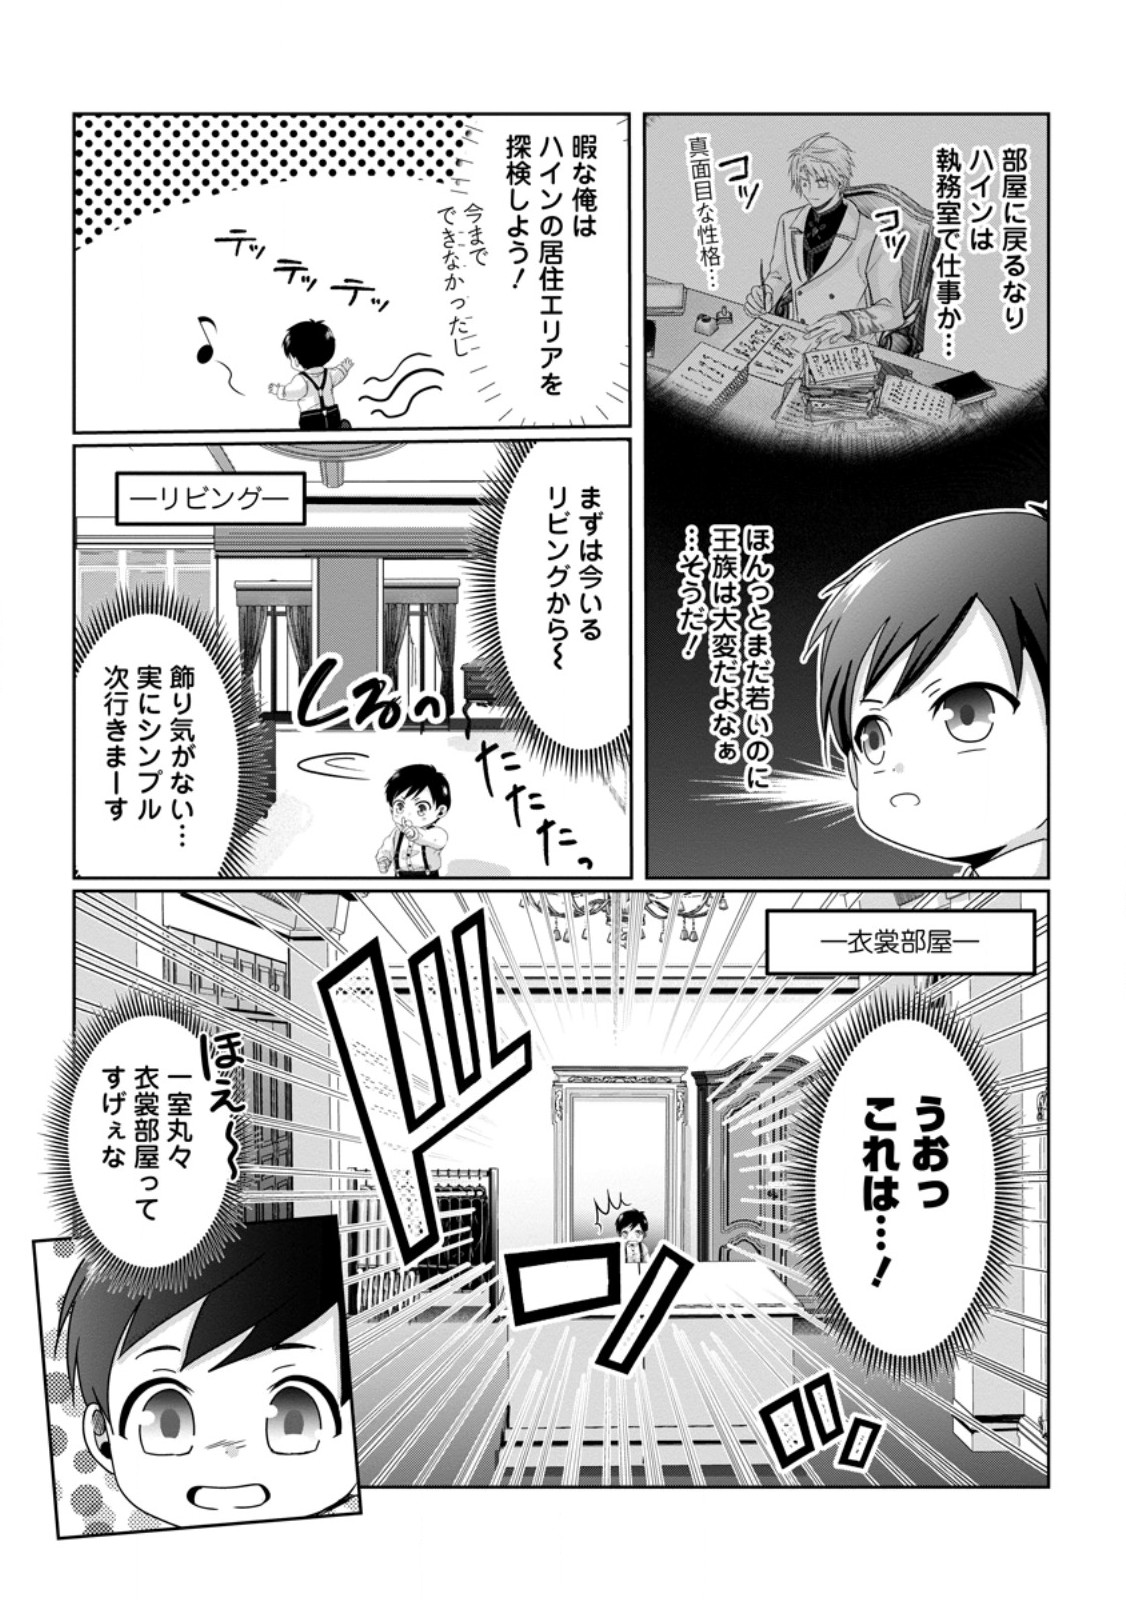 Chittai Ore no Makikomare Isekai Seikatsu - Chapter 6.1 - Page 10